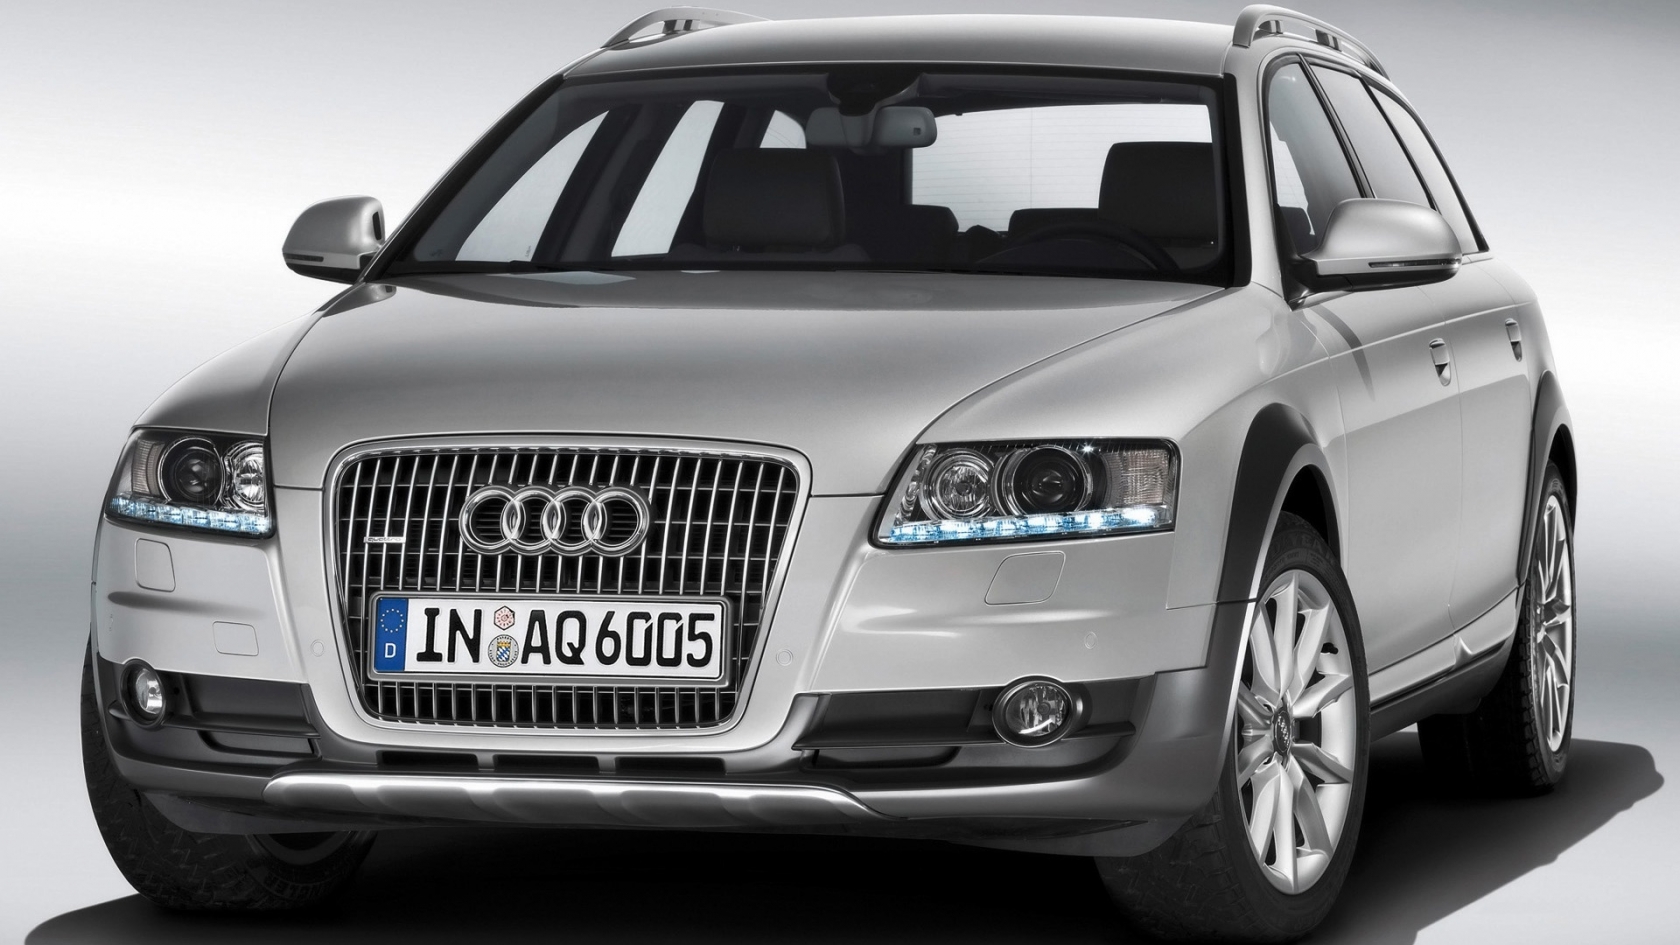 2009 Audi A6 allroad quattro - Front Angle for 1680 x 945 HDTV resolution